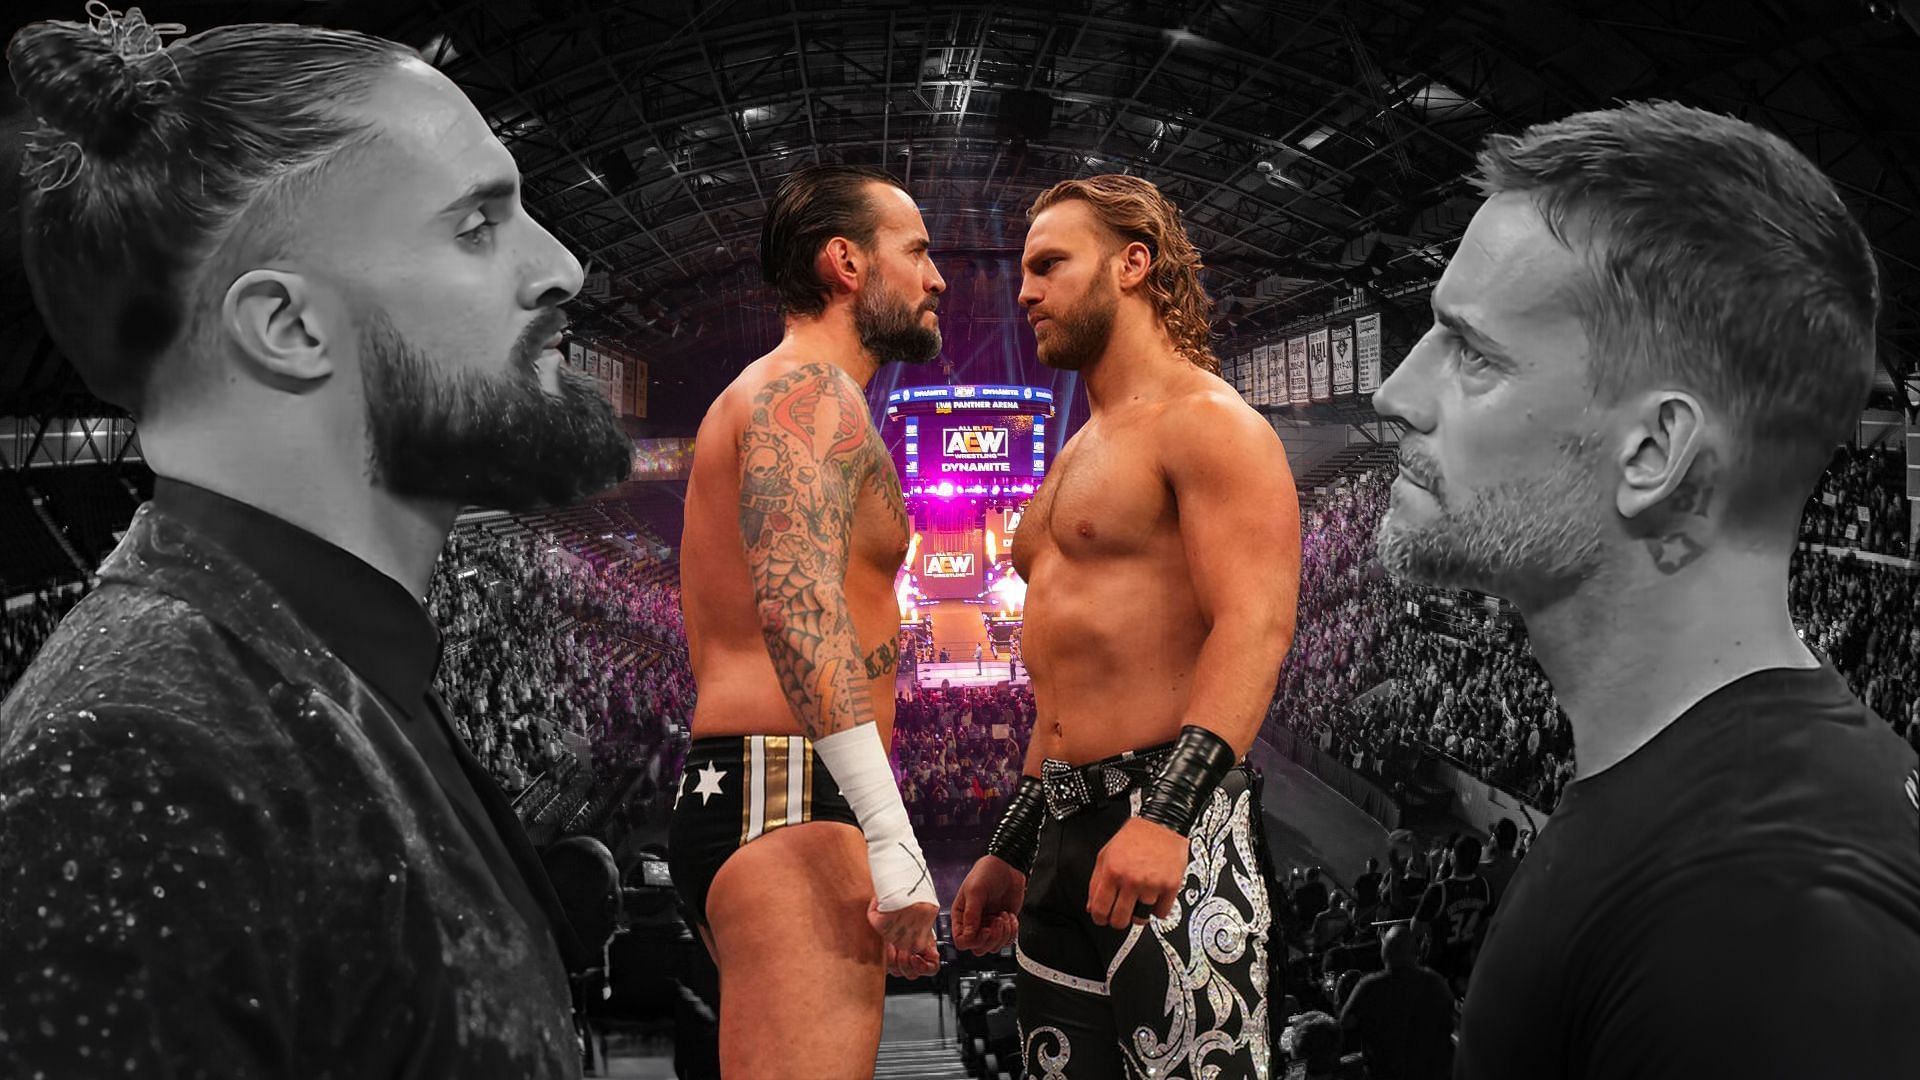 The feud between Seth Rollins and CM Punk seems familiar by design